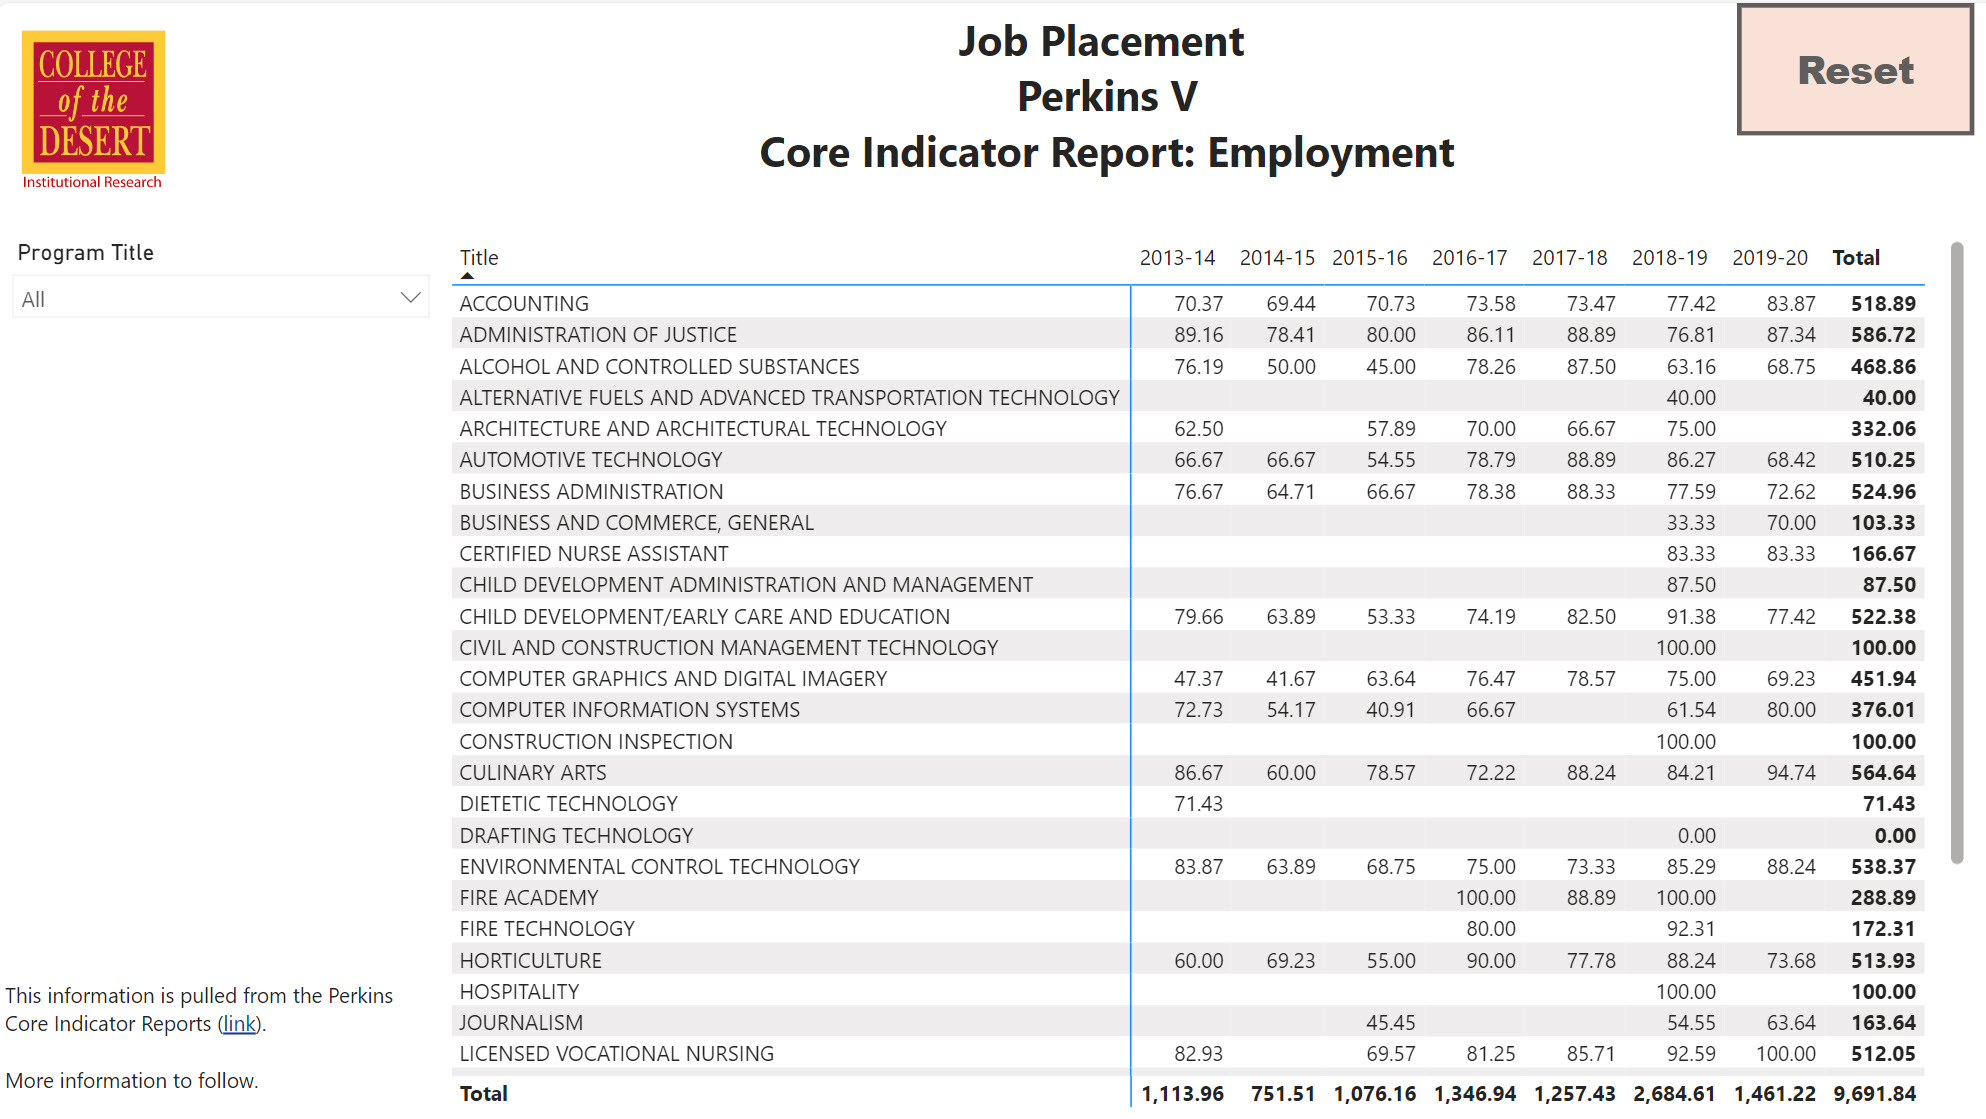 Job Placement Data